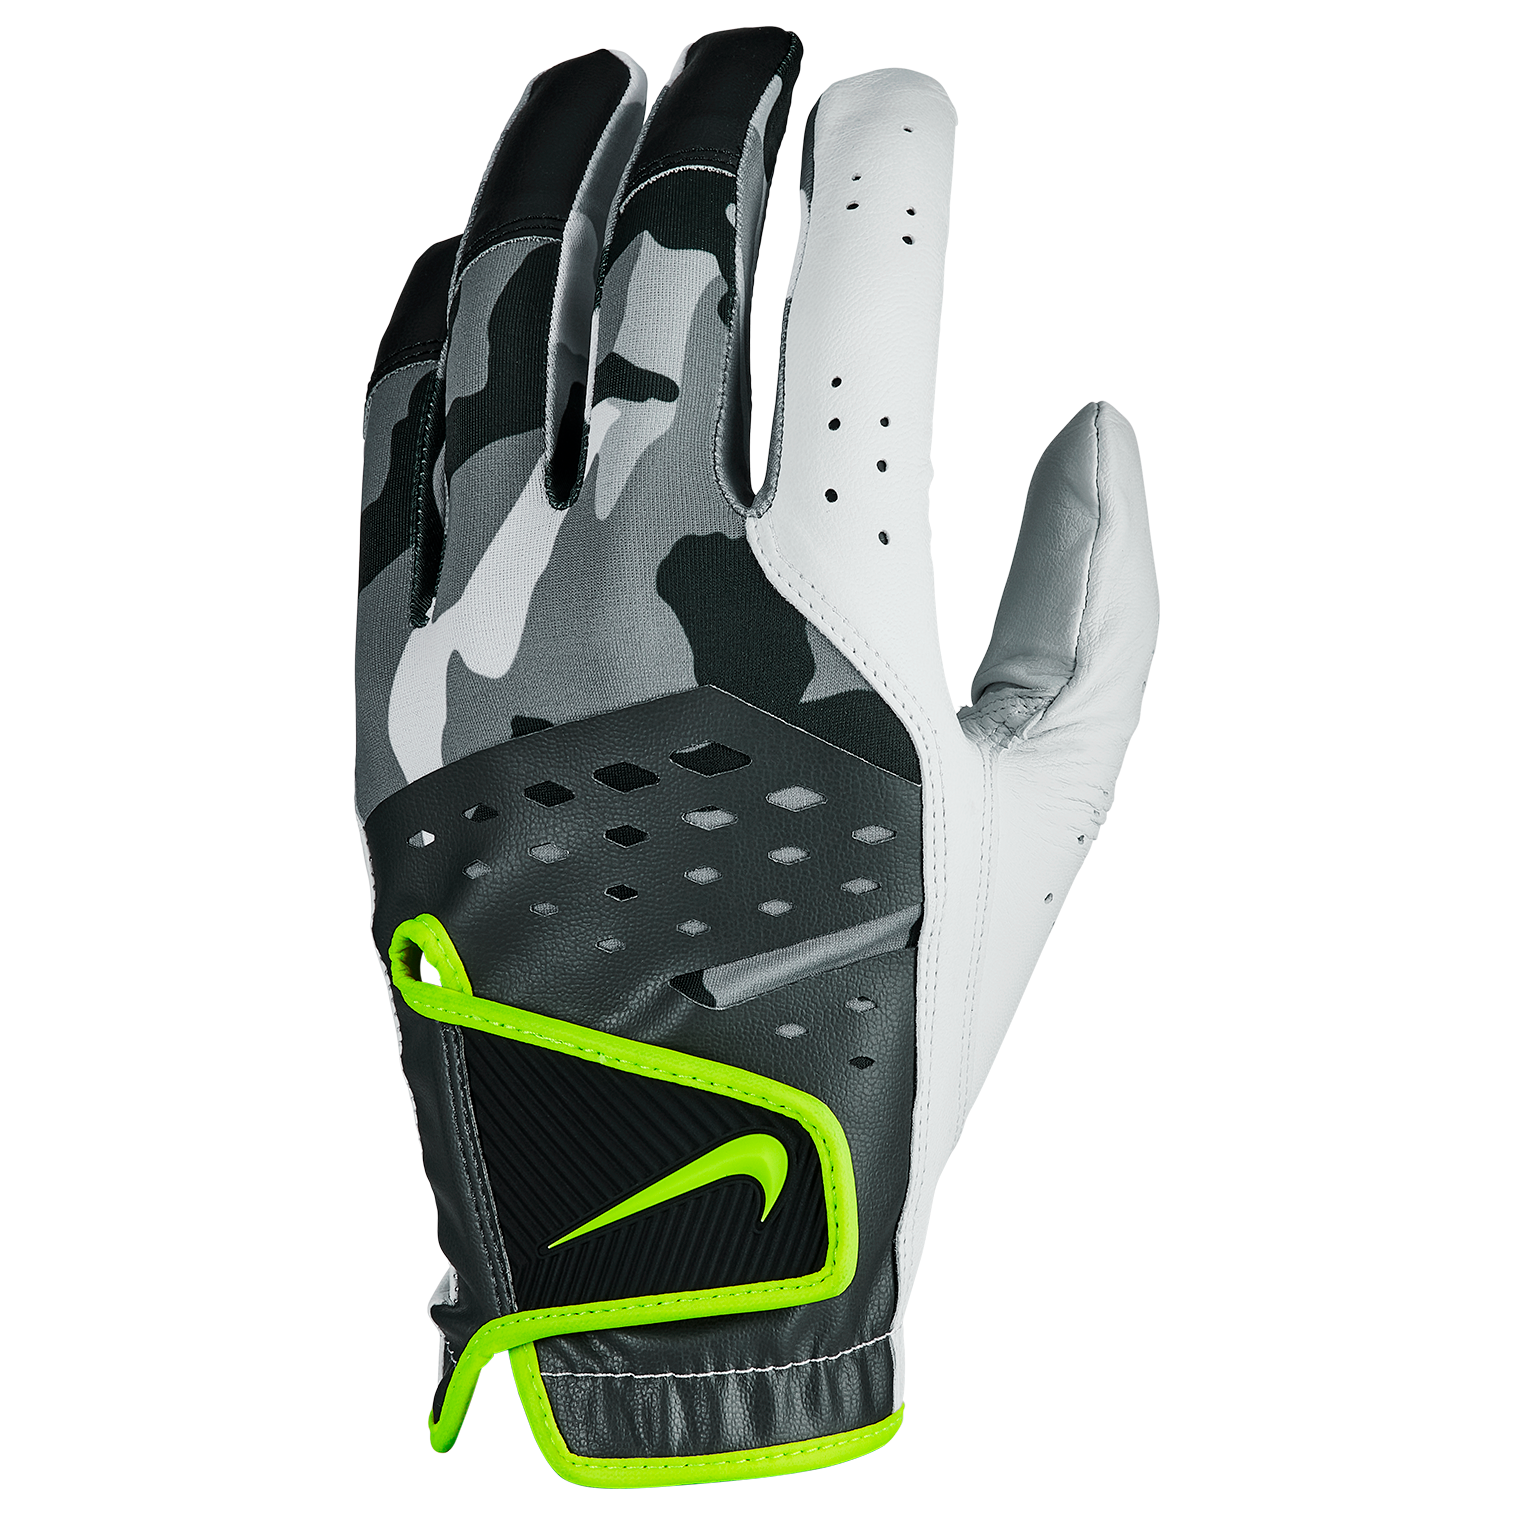 Tech Extreme VII Golf Glove